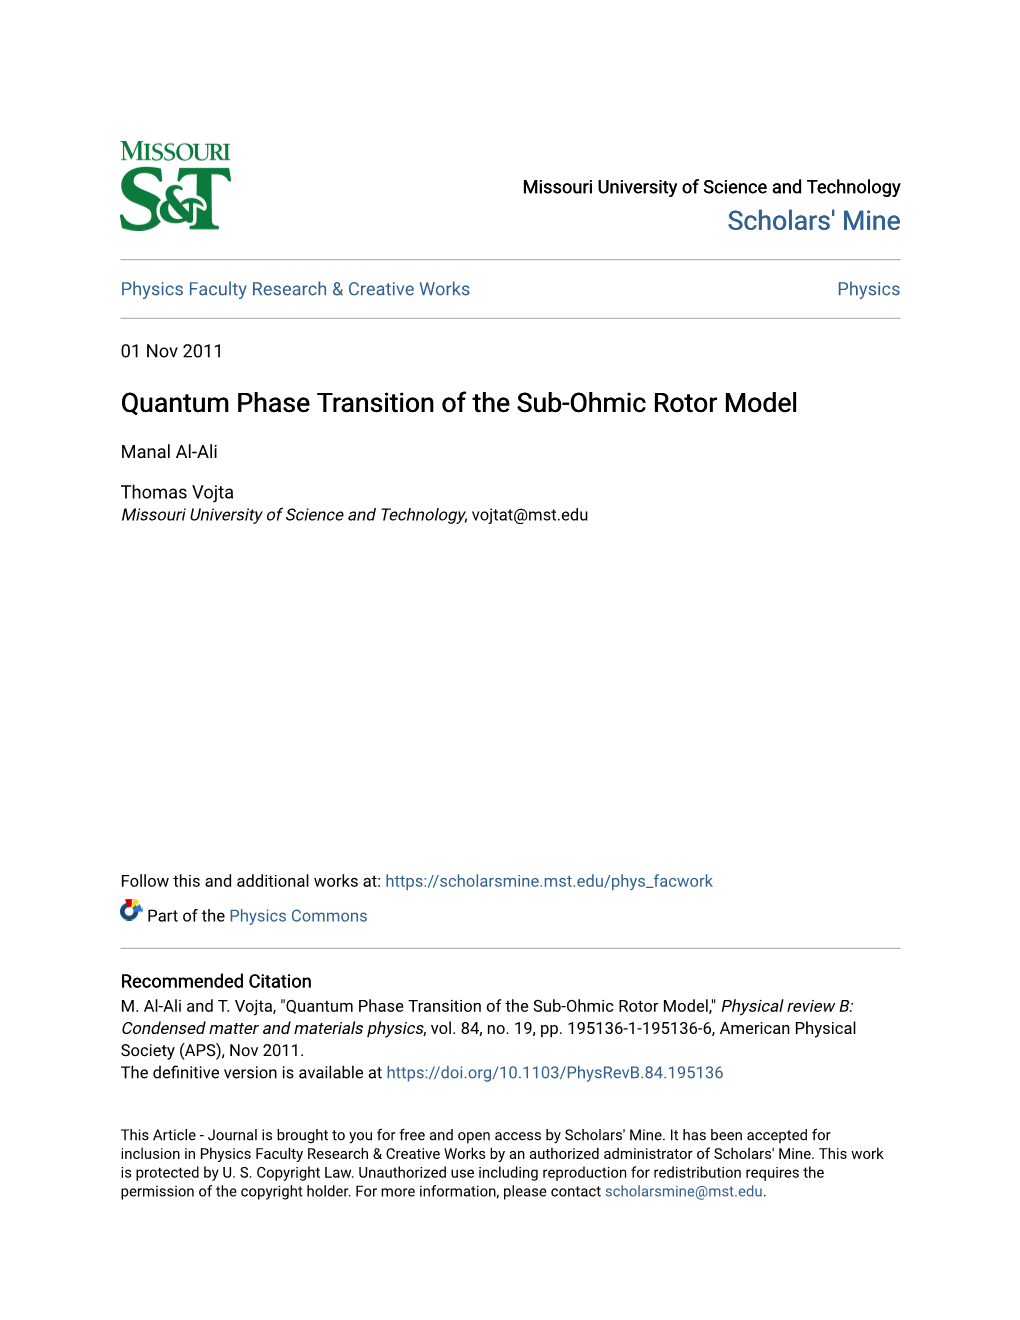 Quantum Phase Transition of the Sub-Ohmic Rotor Model